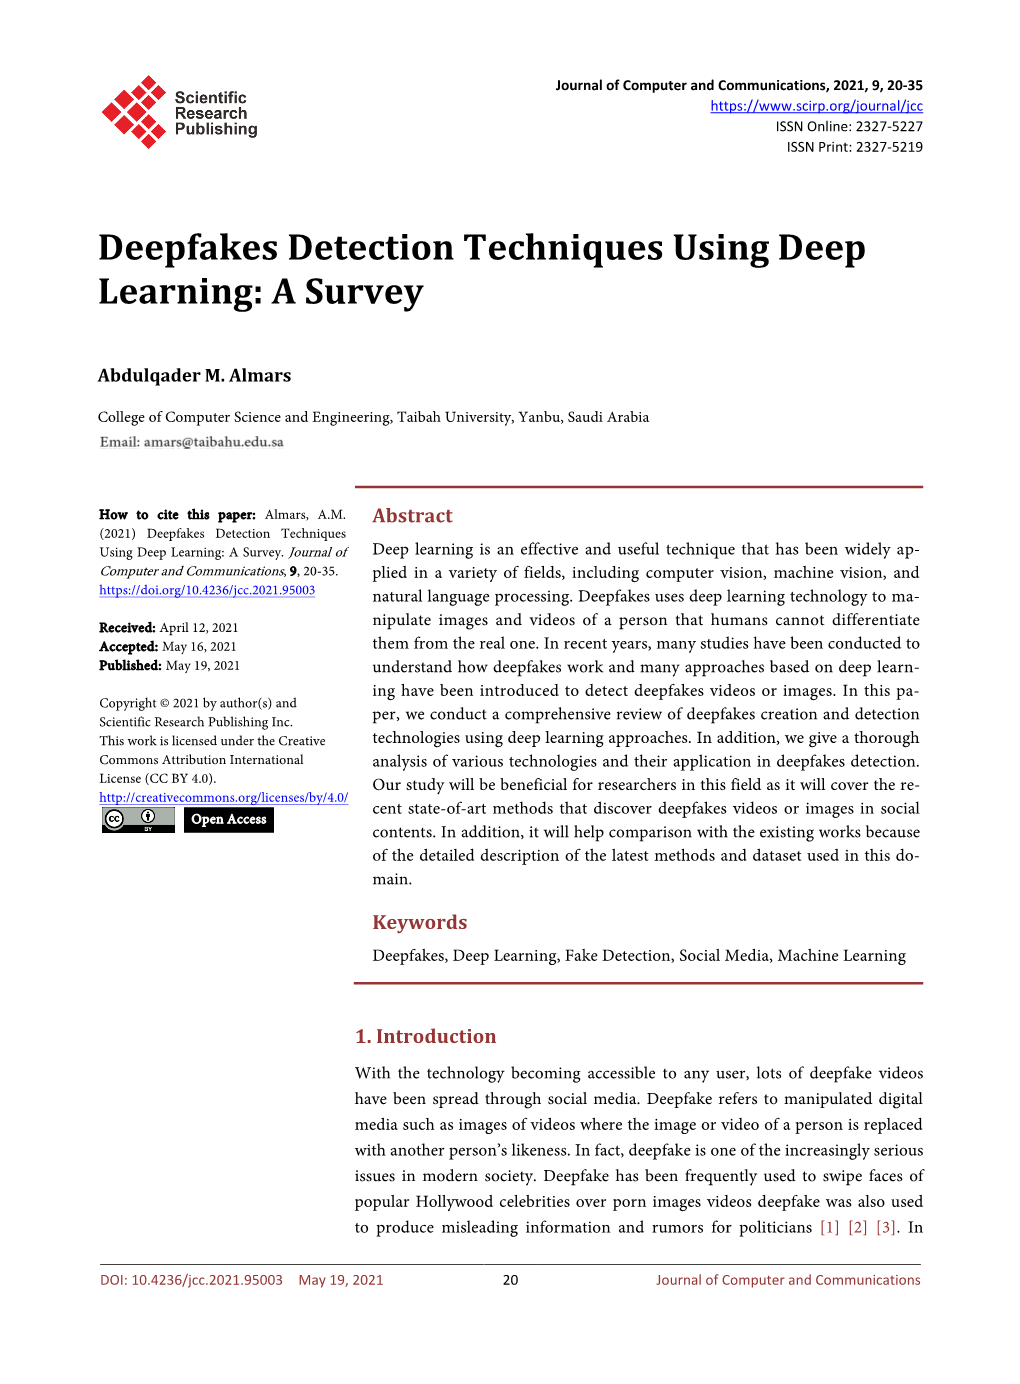 Deepfakes Detection Techniques Using Deep Learning: a Survey